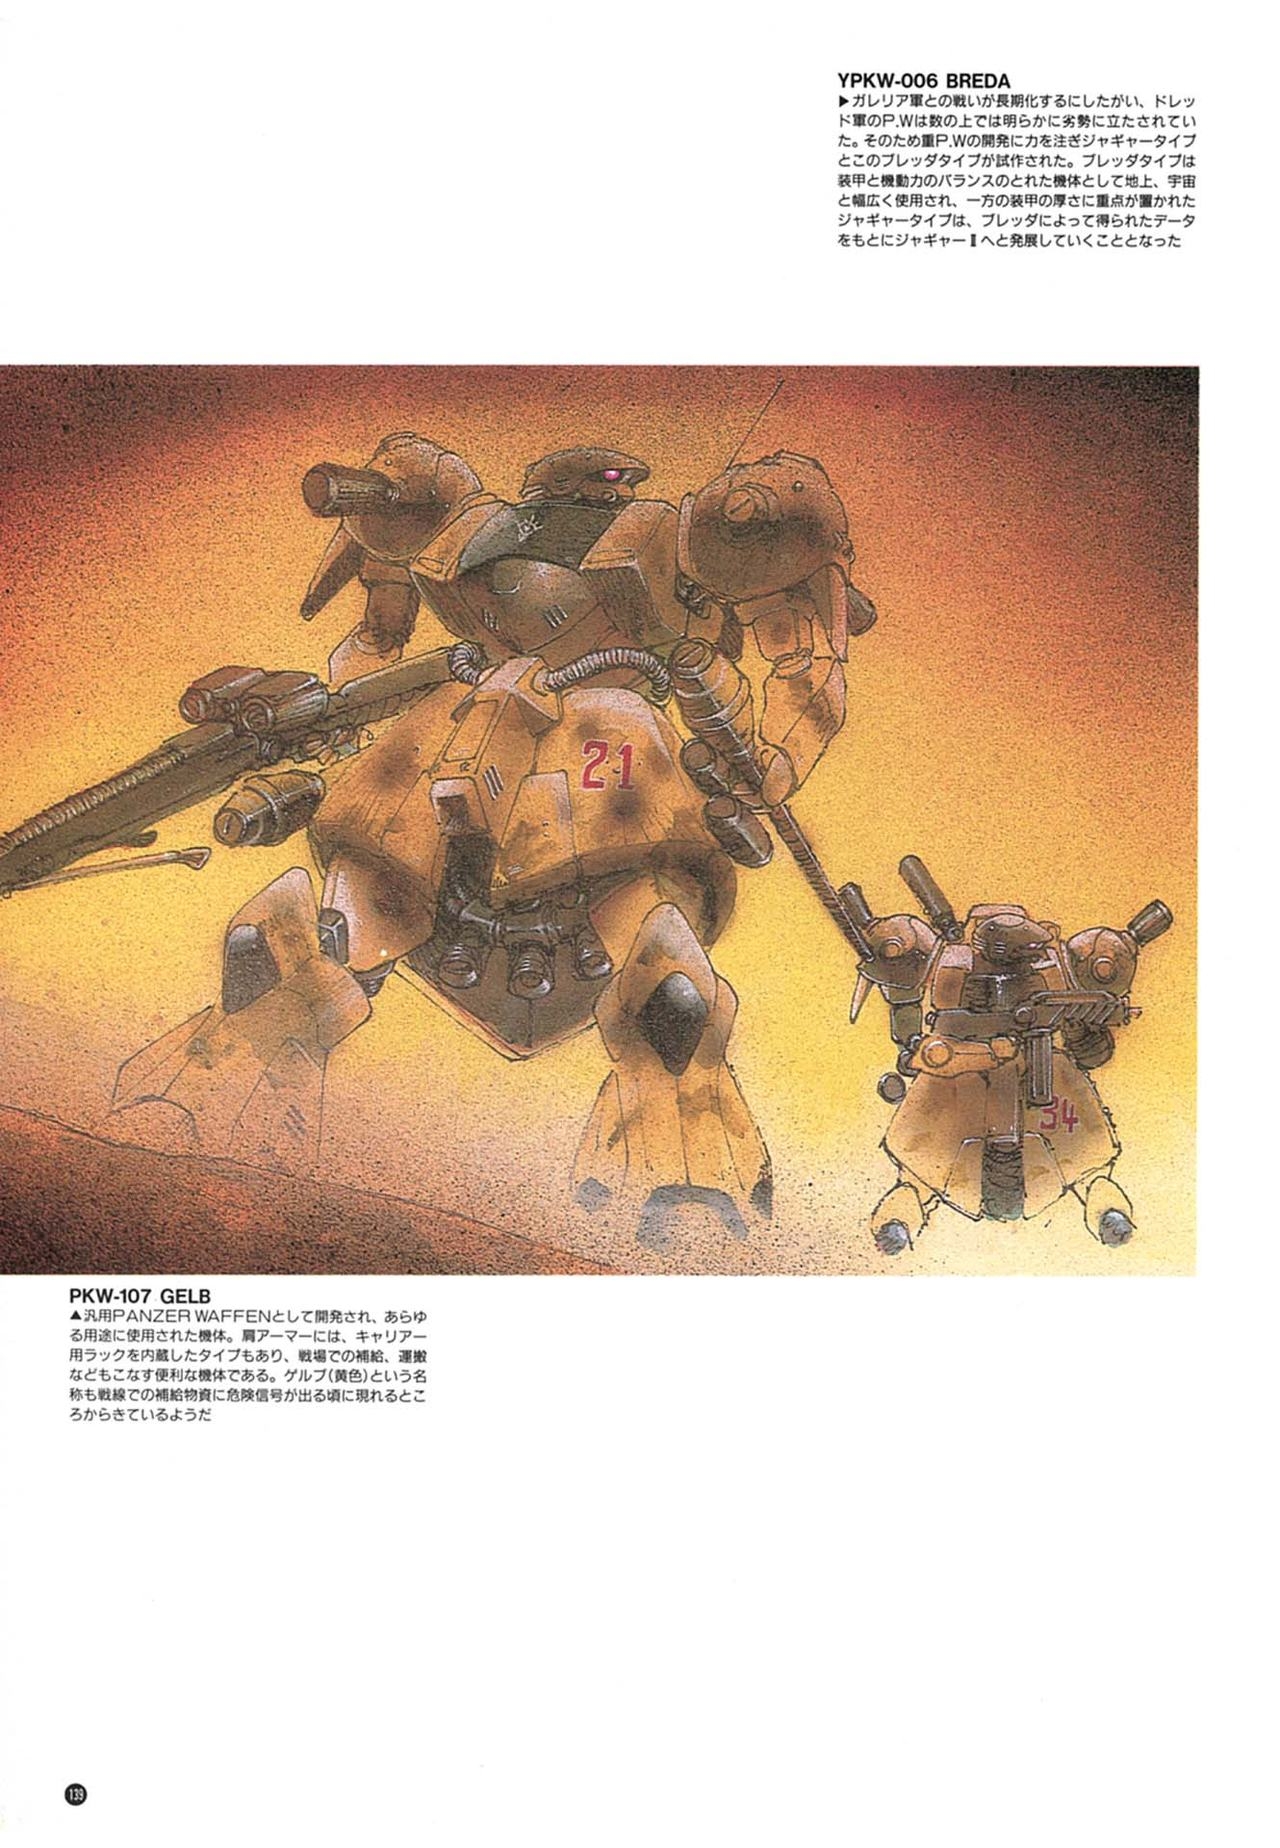 [Kazuhisa Kondo] Kazuhisa Kondo 2D & 3D Works - Go Ahead - From Mobile Suit Gundam to Original Mechanism 138